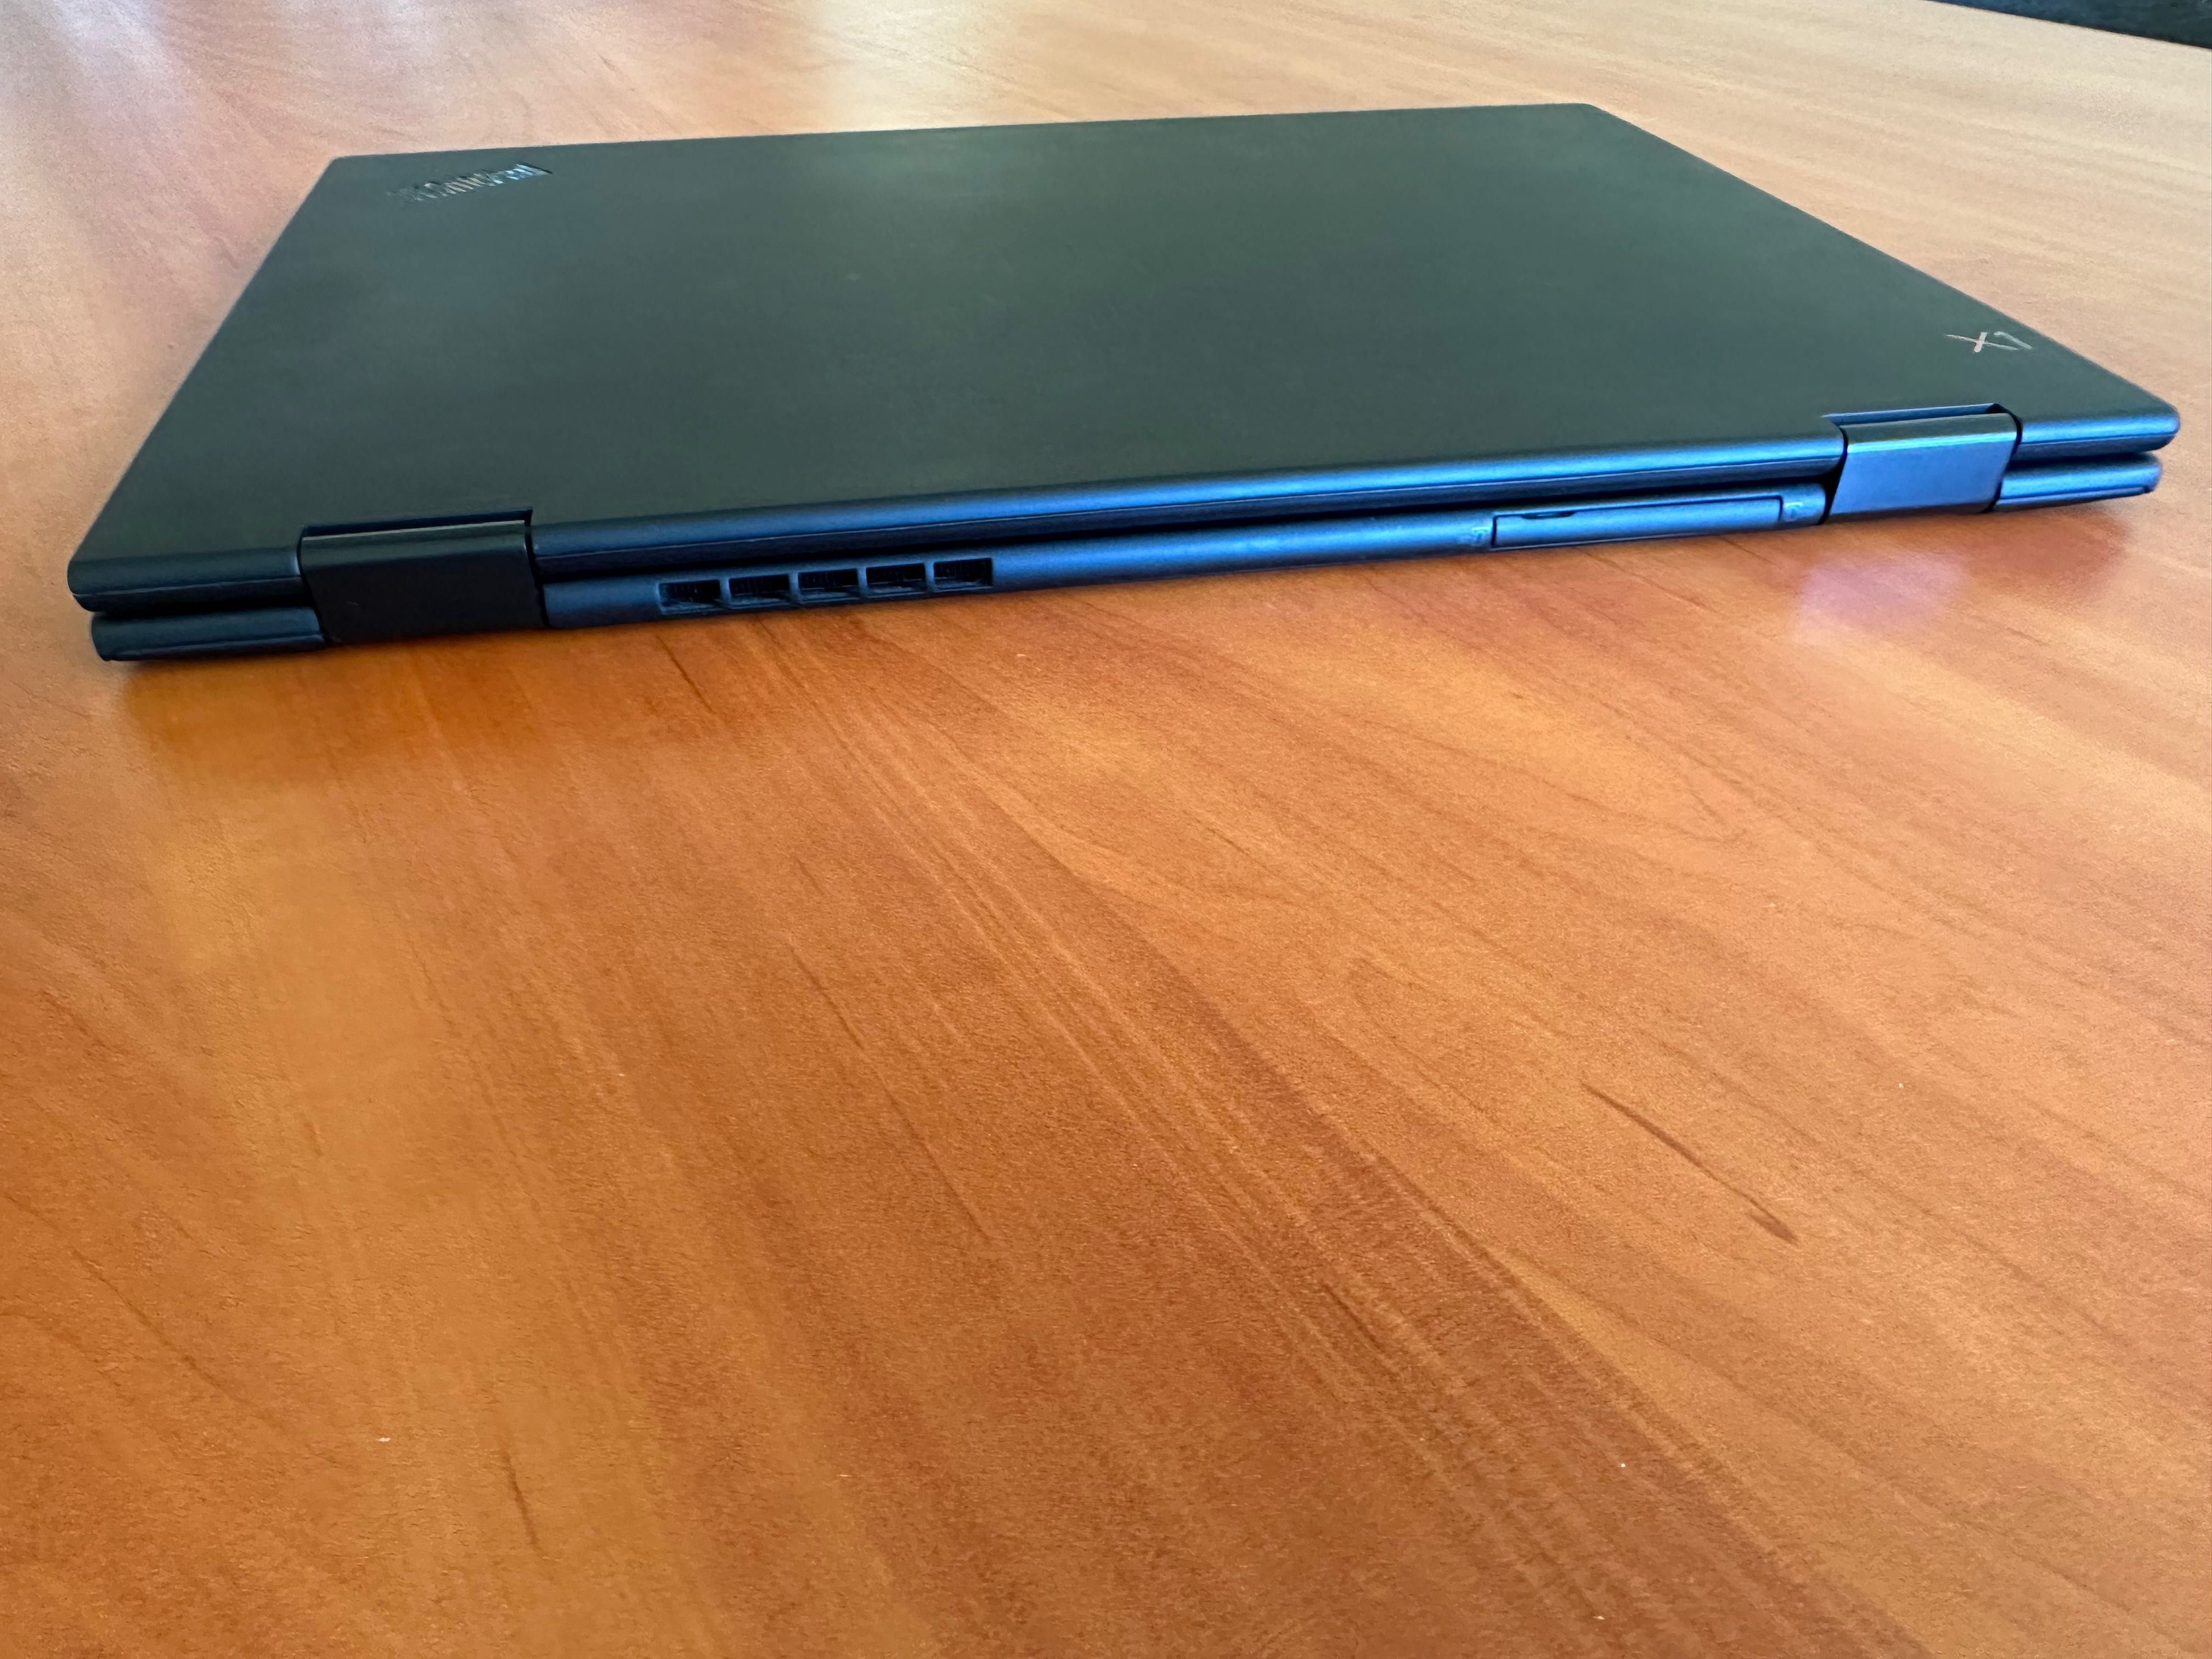 Ultrabook Lenovo X1 Yoga